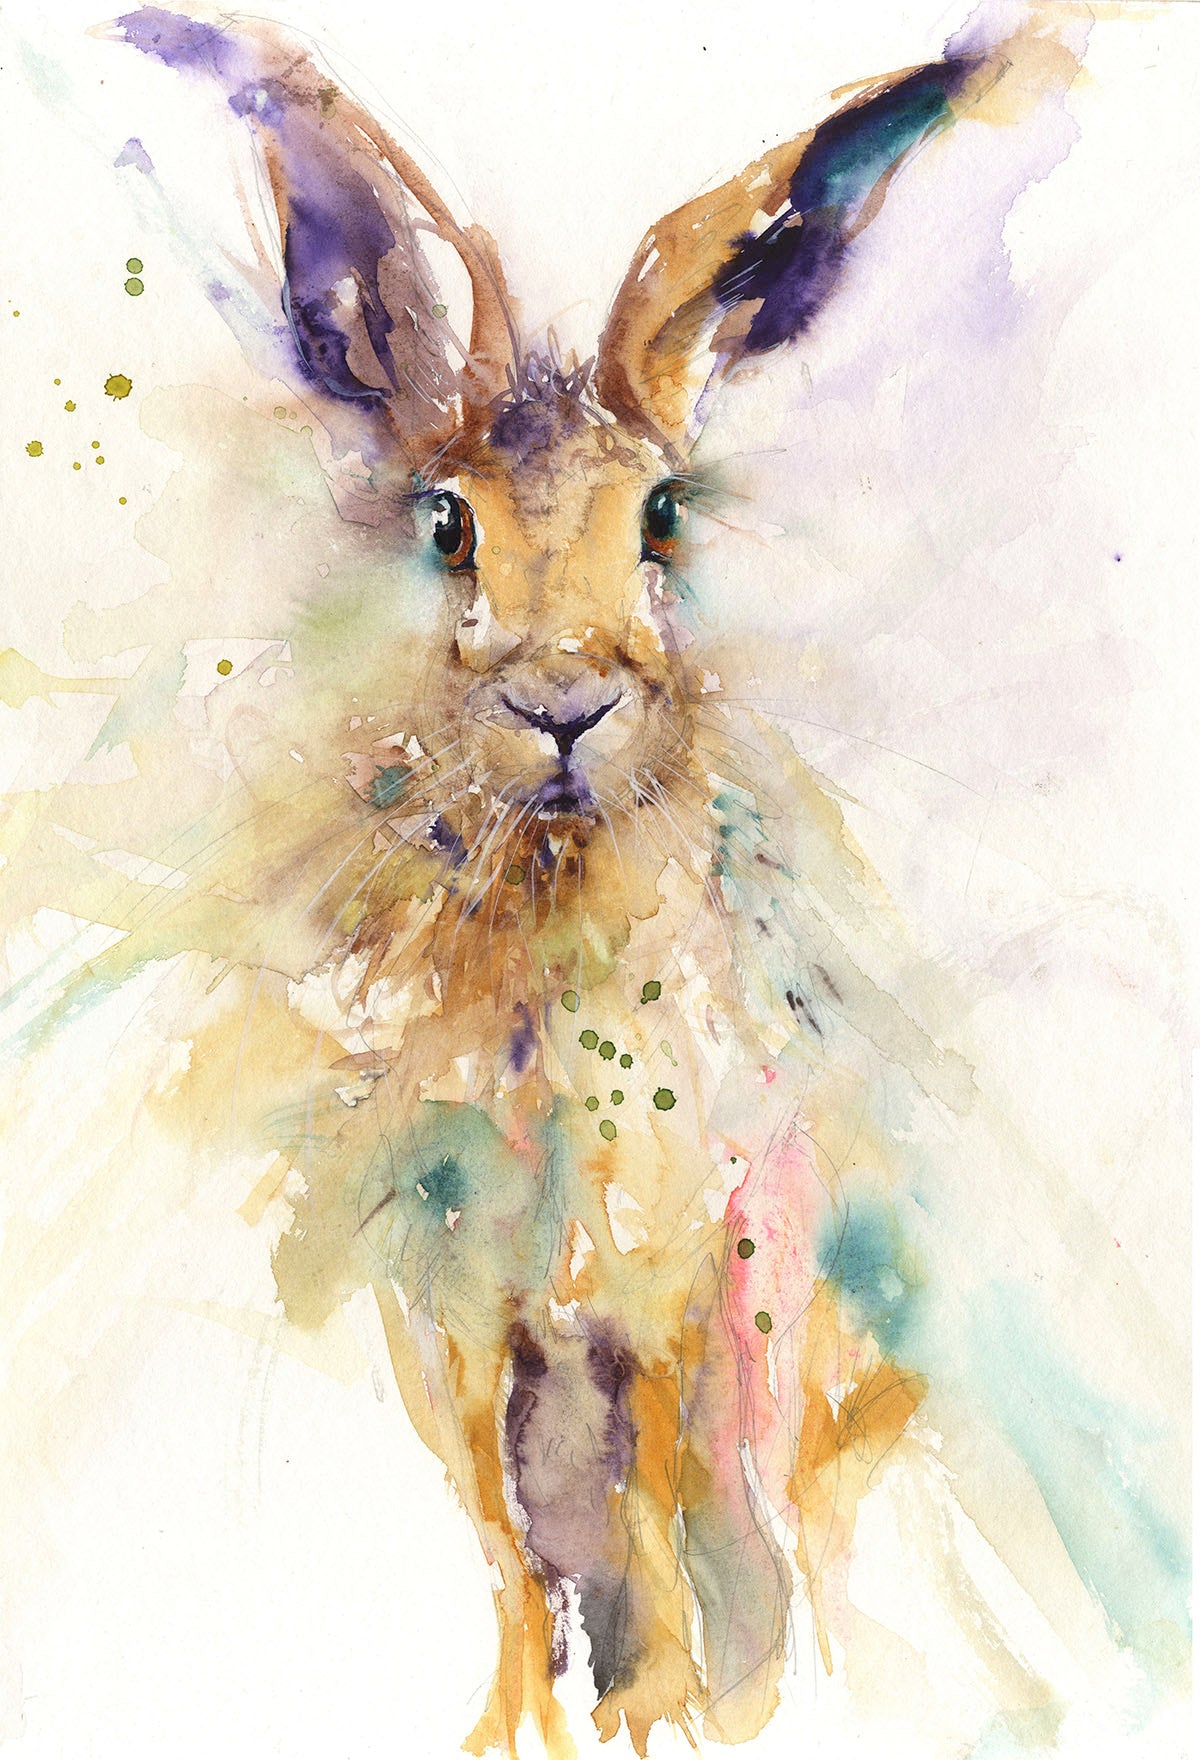 Limited edition hare print "Freddie" - Jen Buckley Art limited edition animal art prints